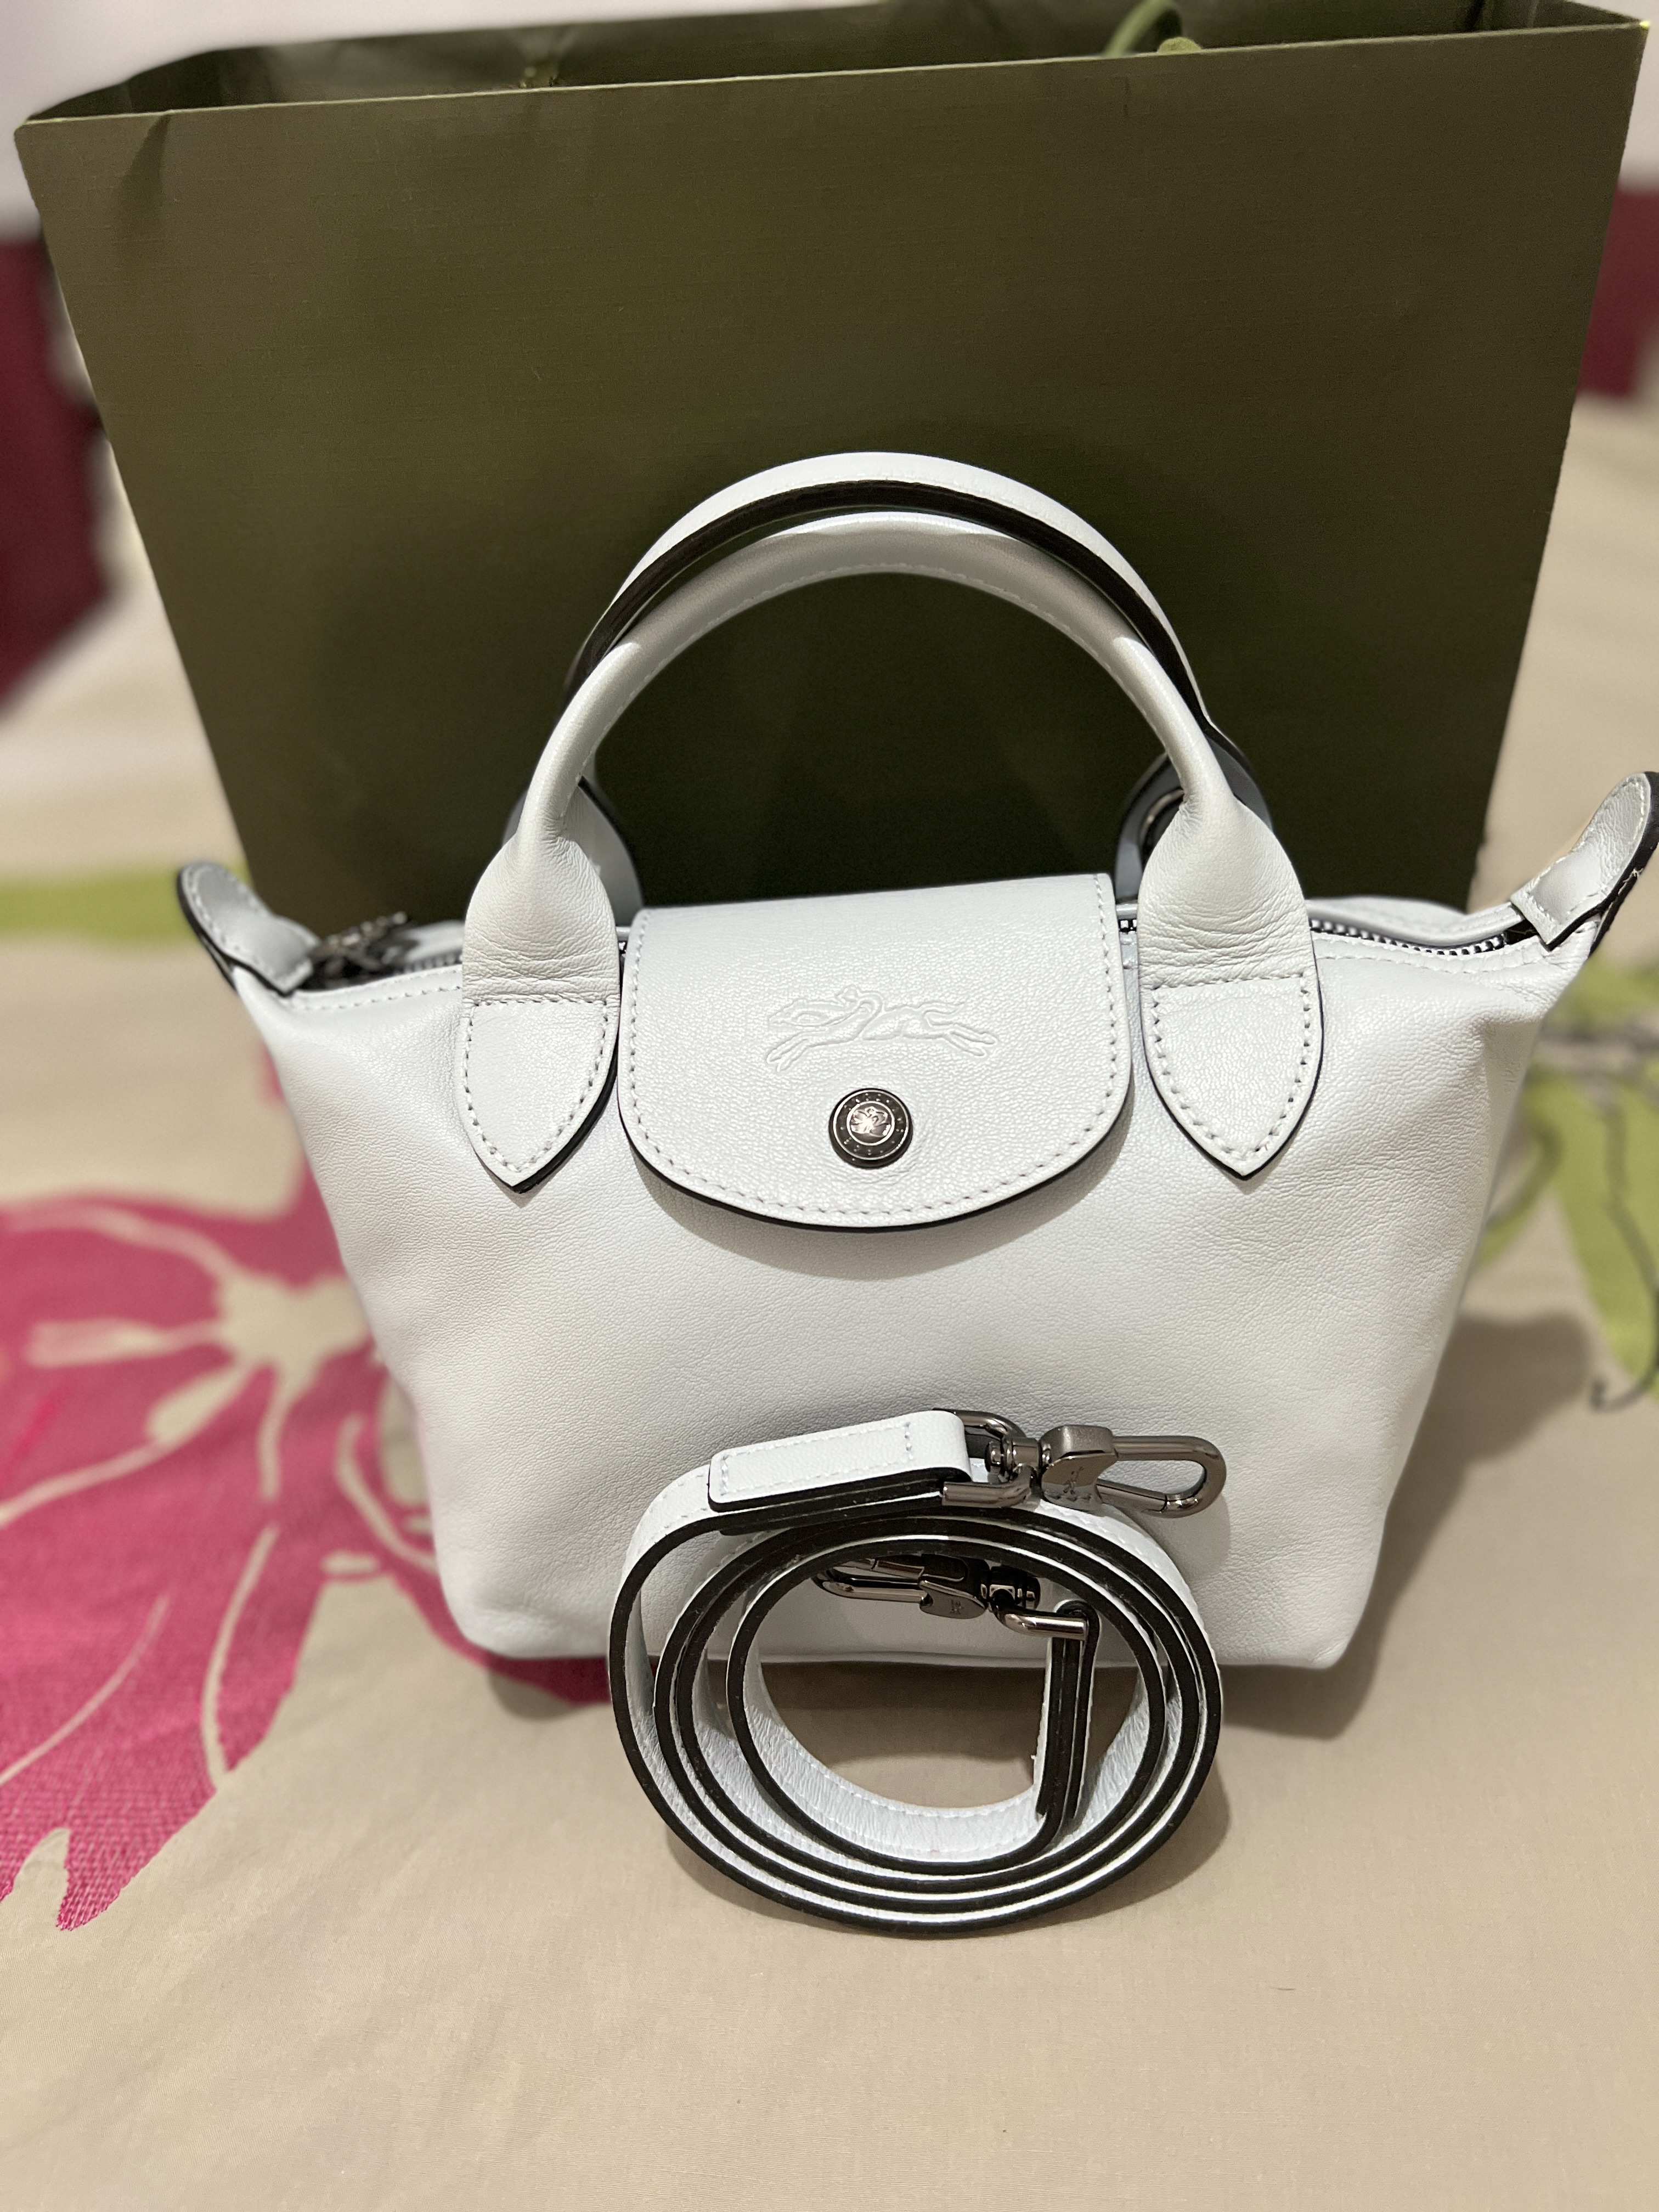 Brand new longchamp mini bag off white authentic photo